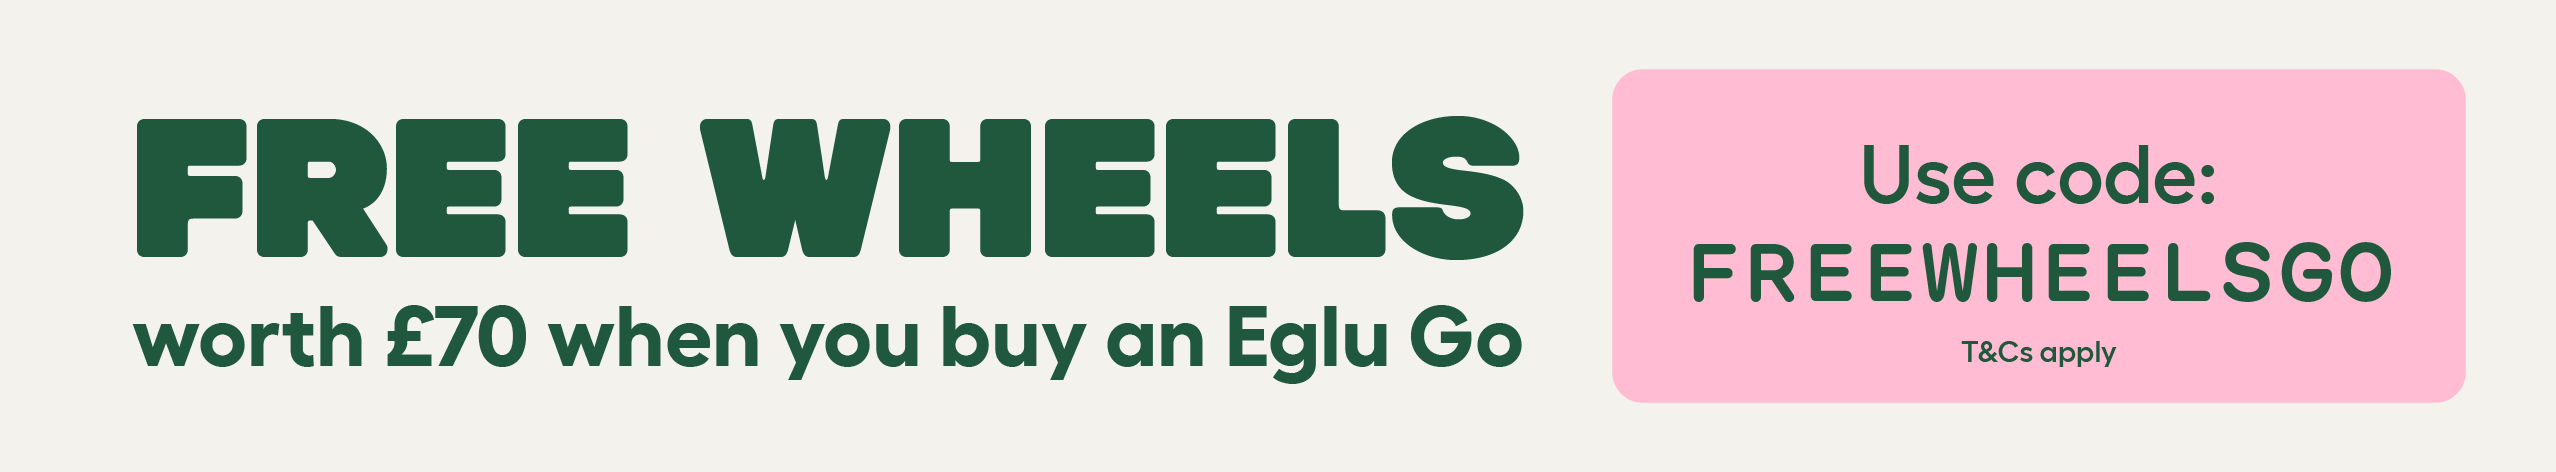 Free wheels when you buy an Eglu Go